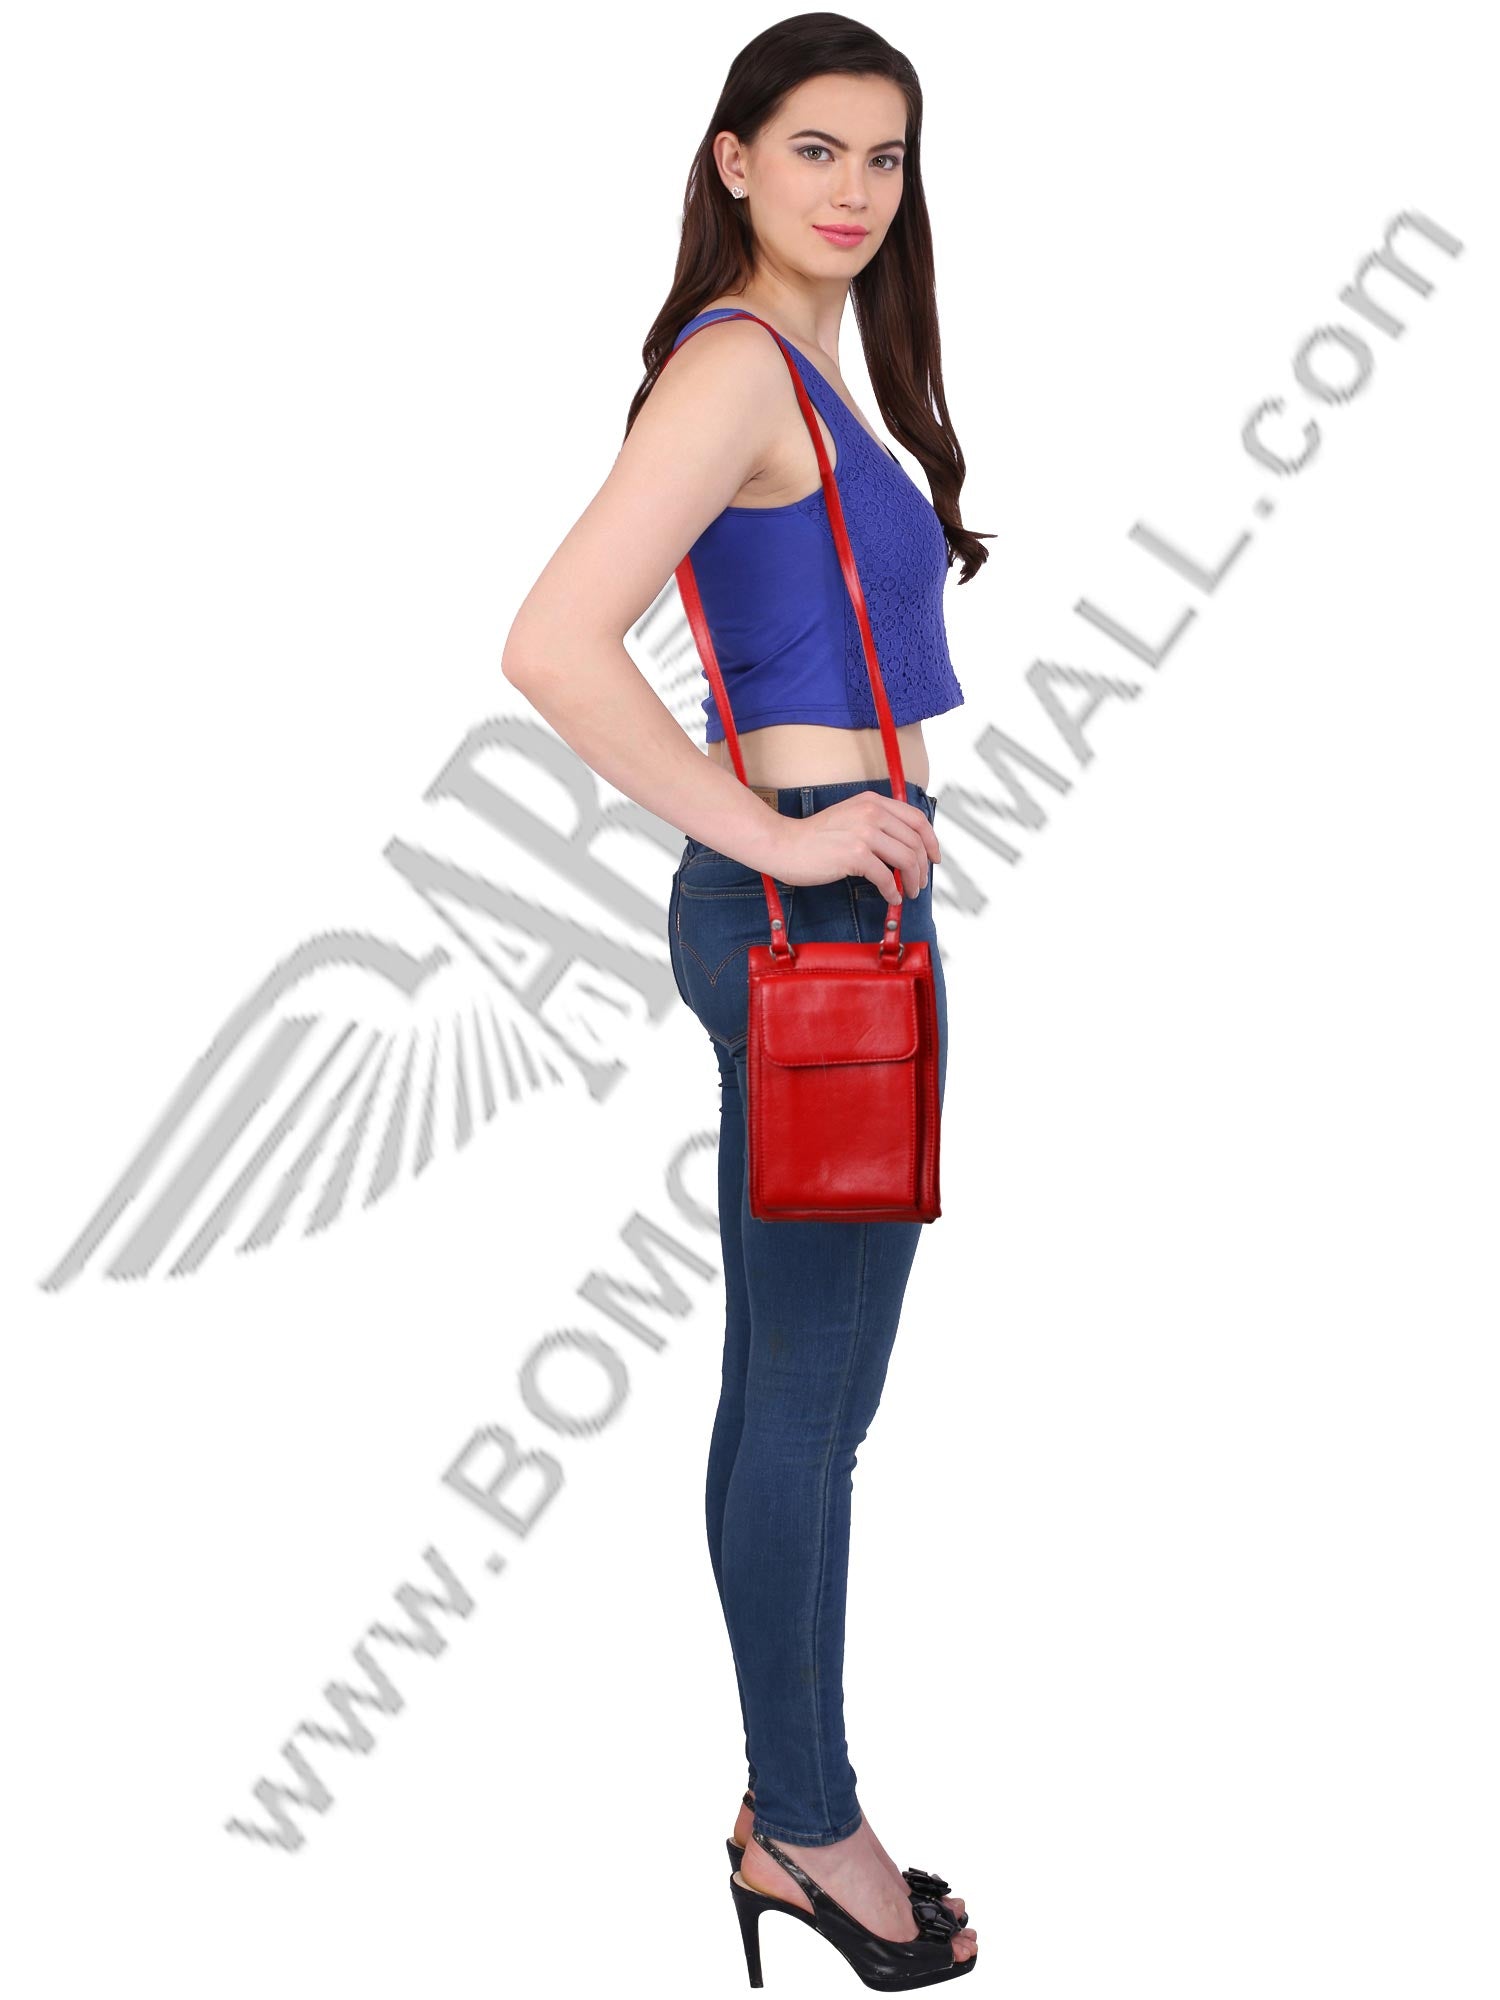 Model posing with stylish red MULTI POCKET CROSS BODY HAND BAG